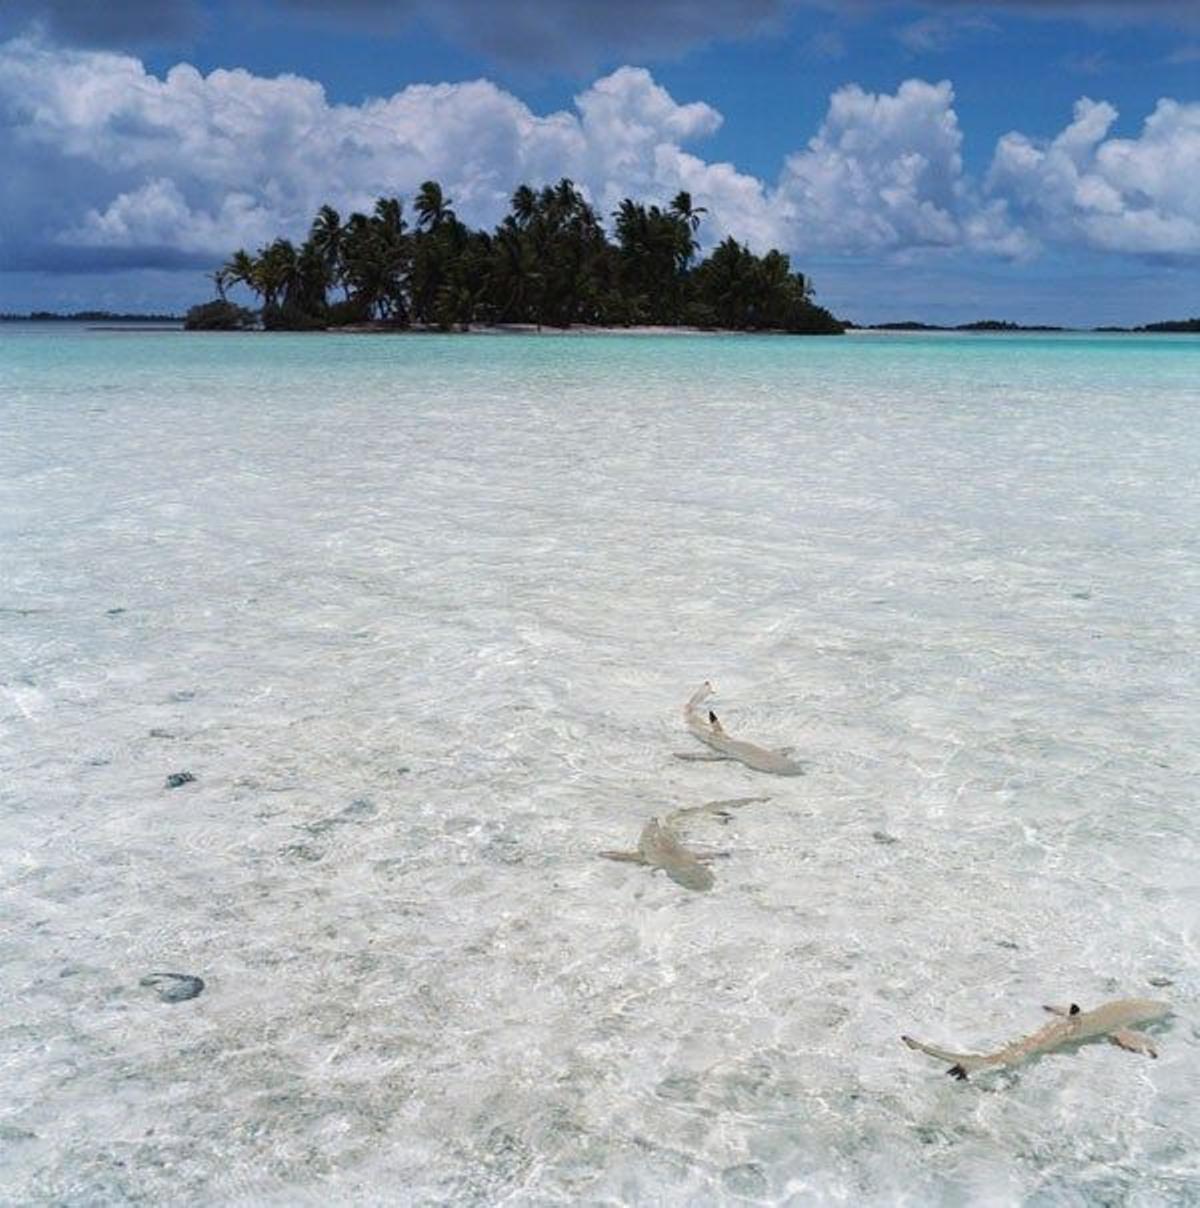 Peces en las aguas cristalinas de la Laguna Azul del atolón de Rangiroa.